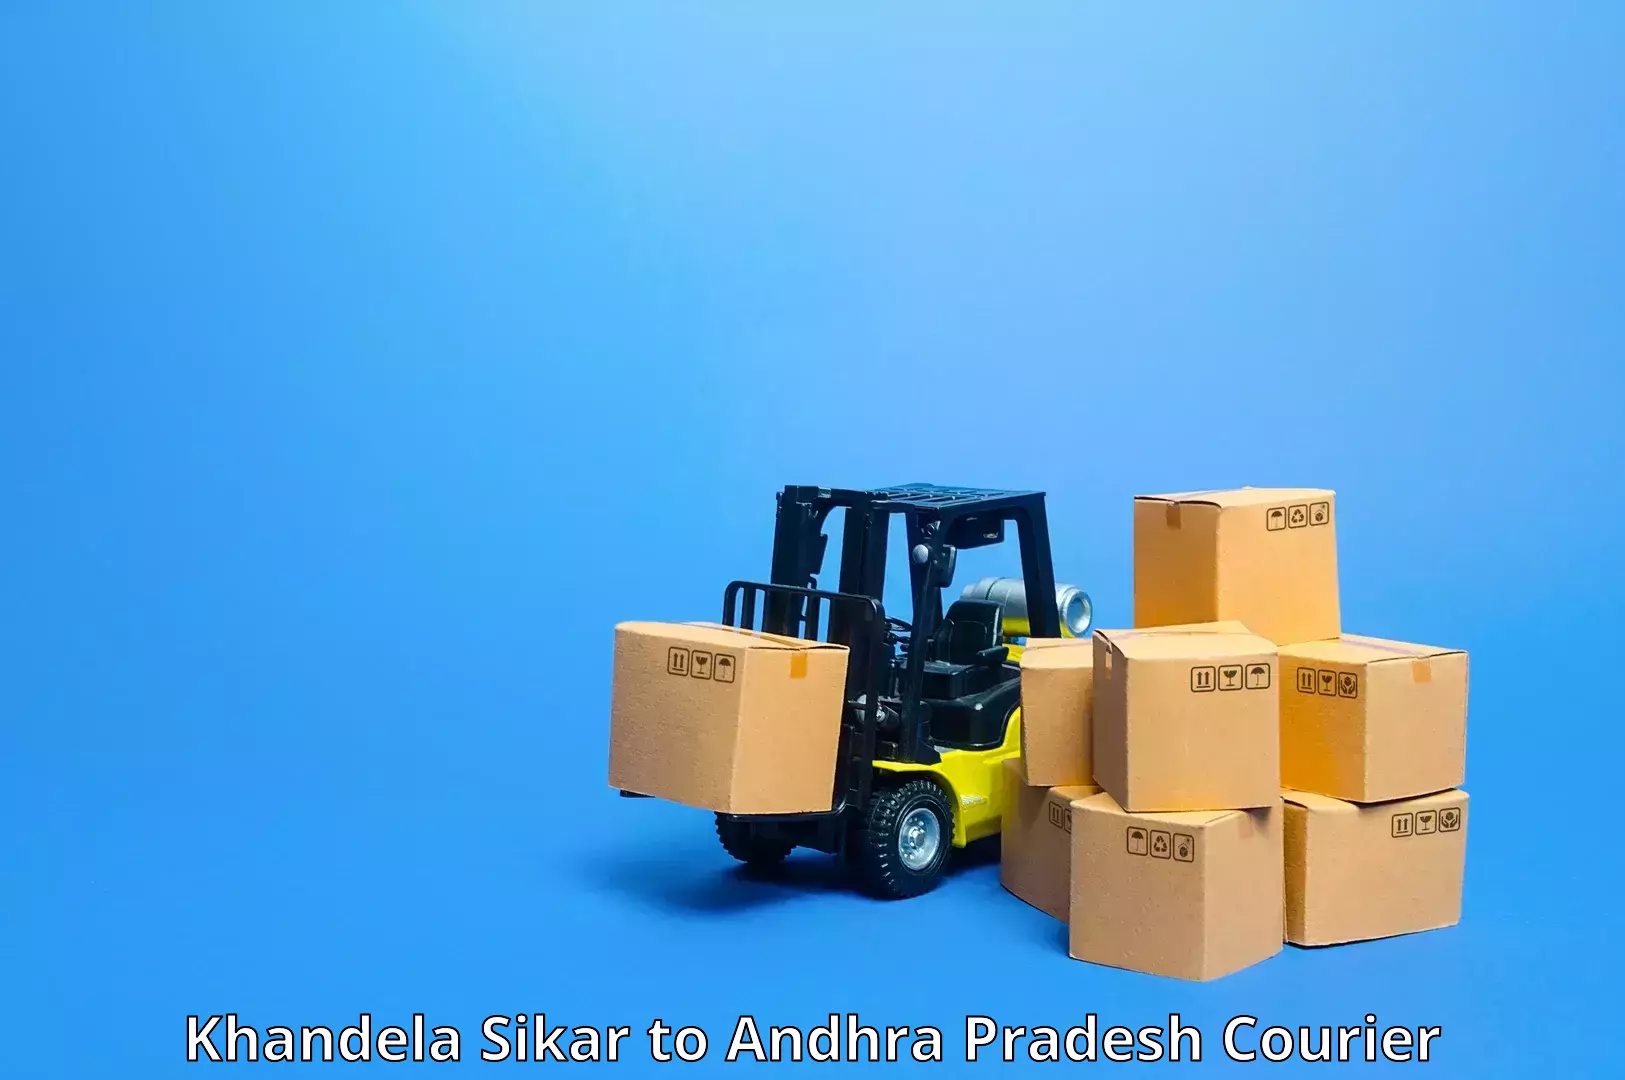 Express delivery solutions Khandela Sikar to Narsapur